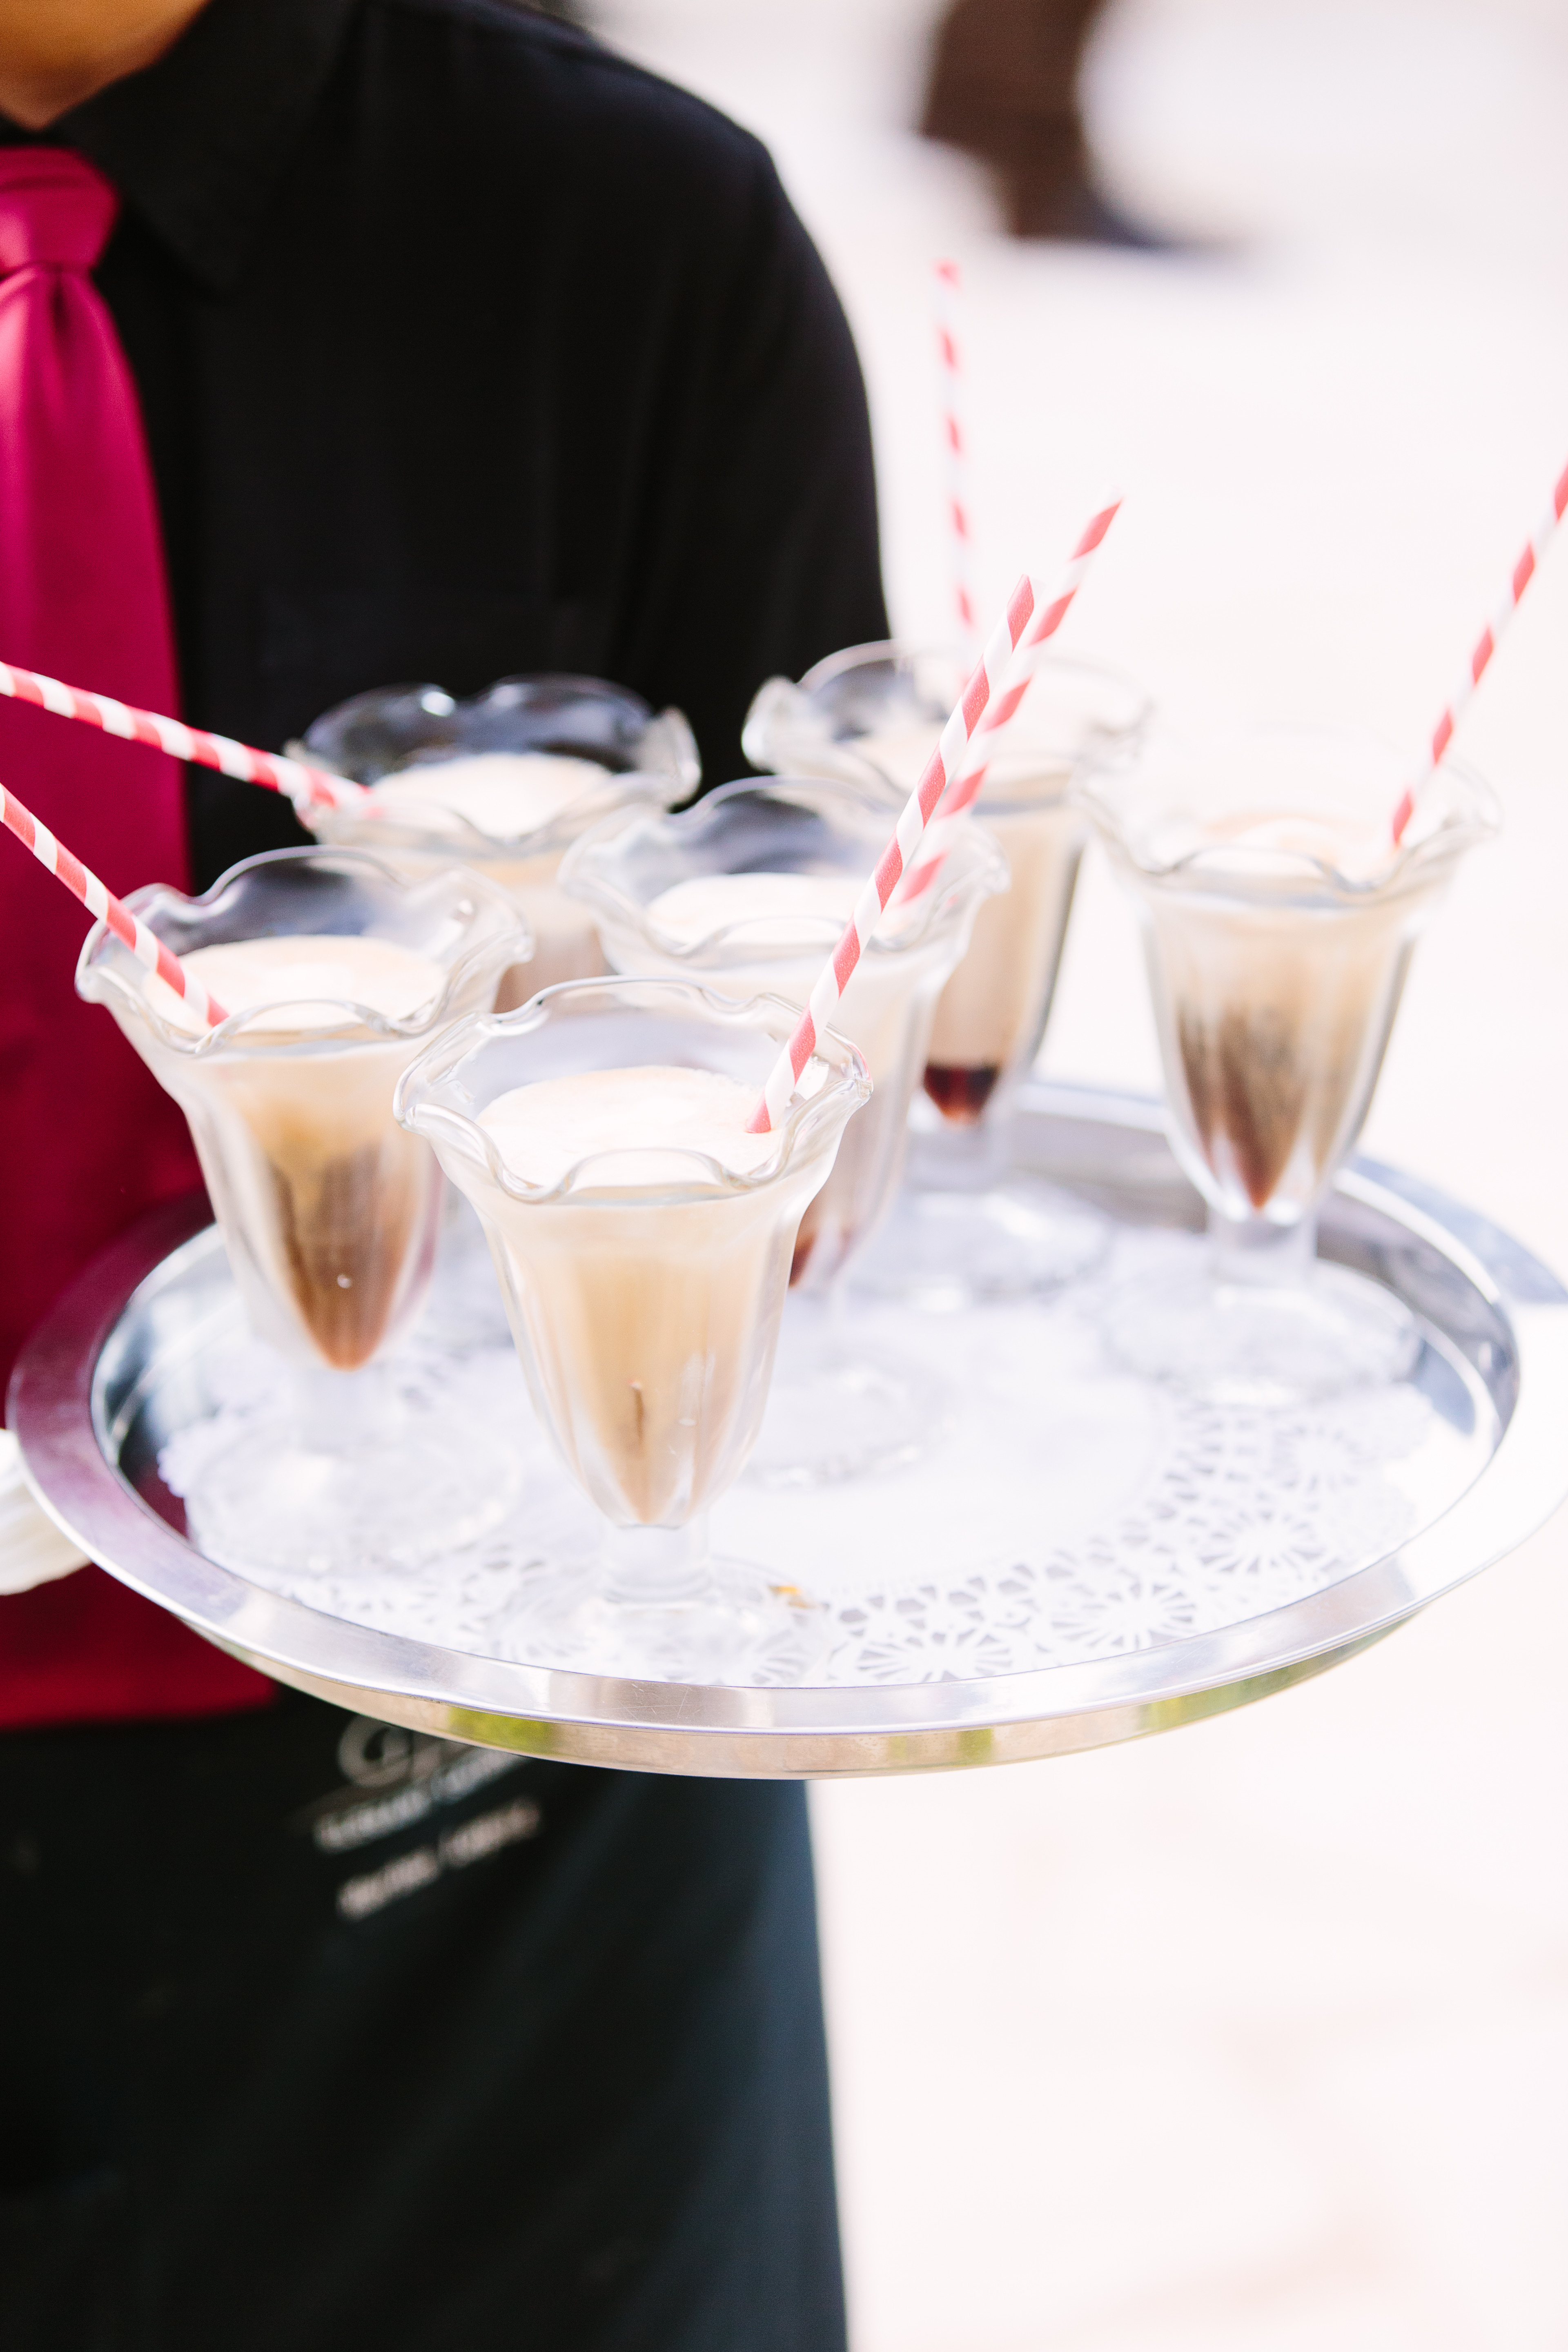 Chocolate stout floats in sundae glasses on a server's platter